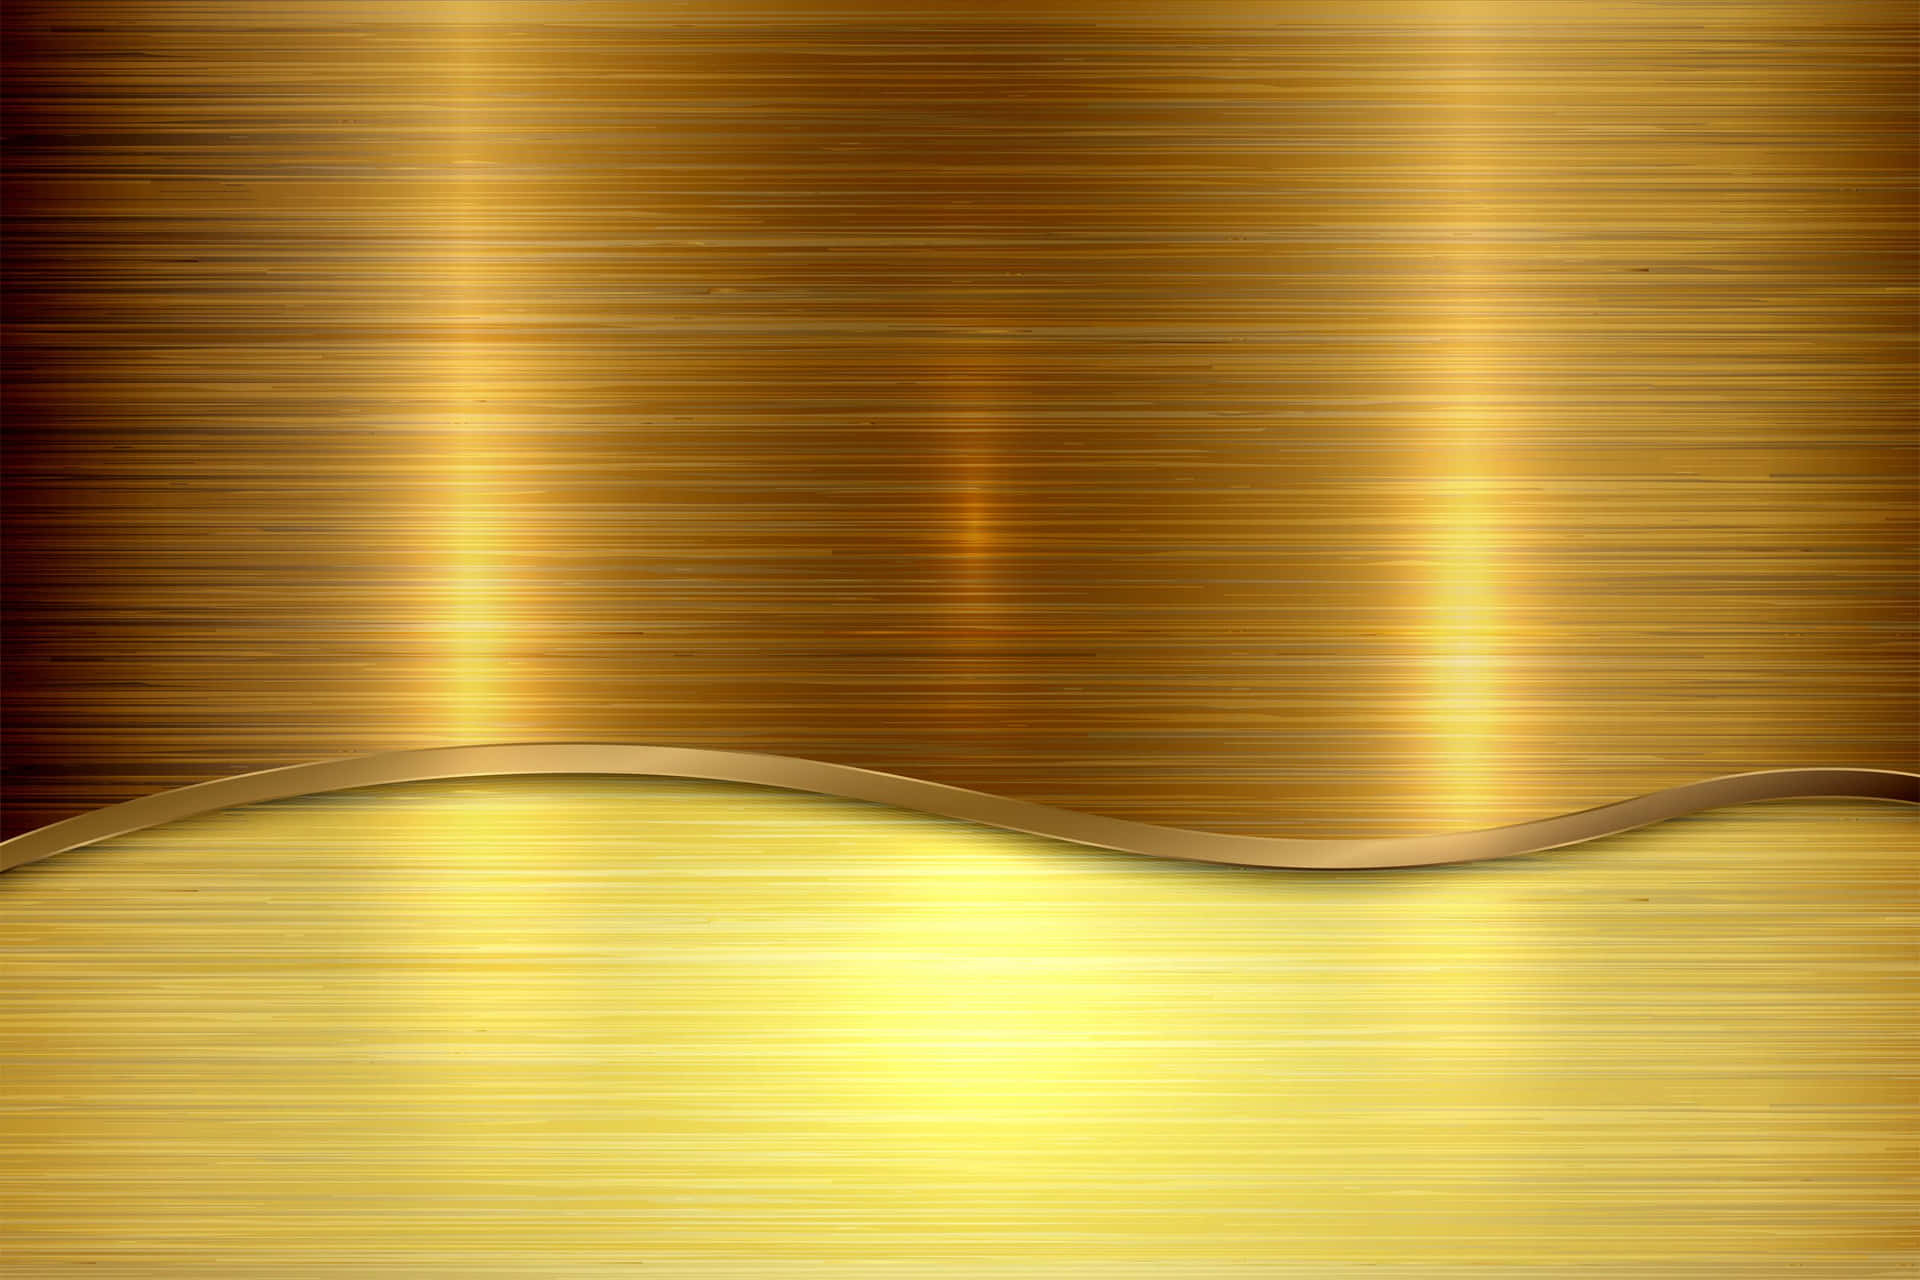 100+] Metallic Gold Background s 